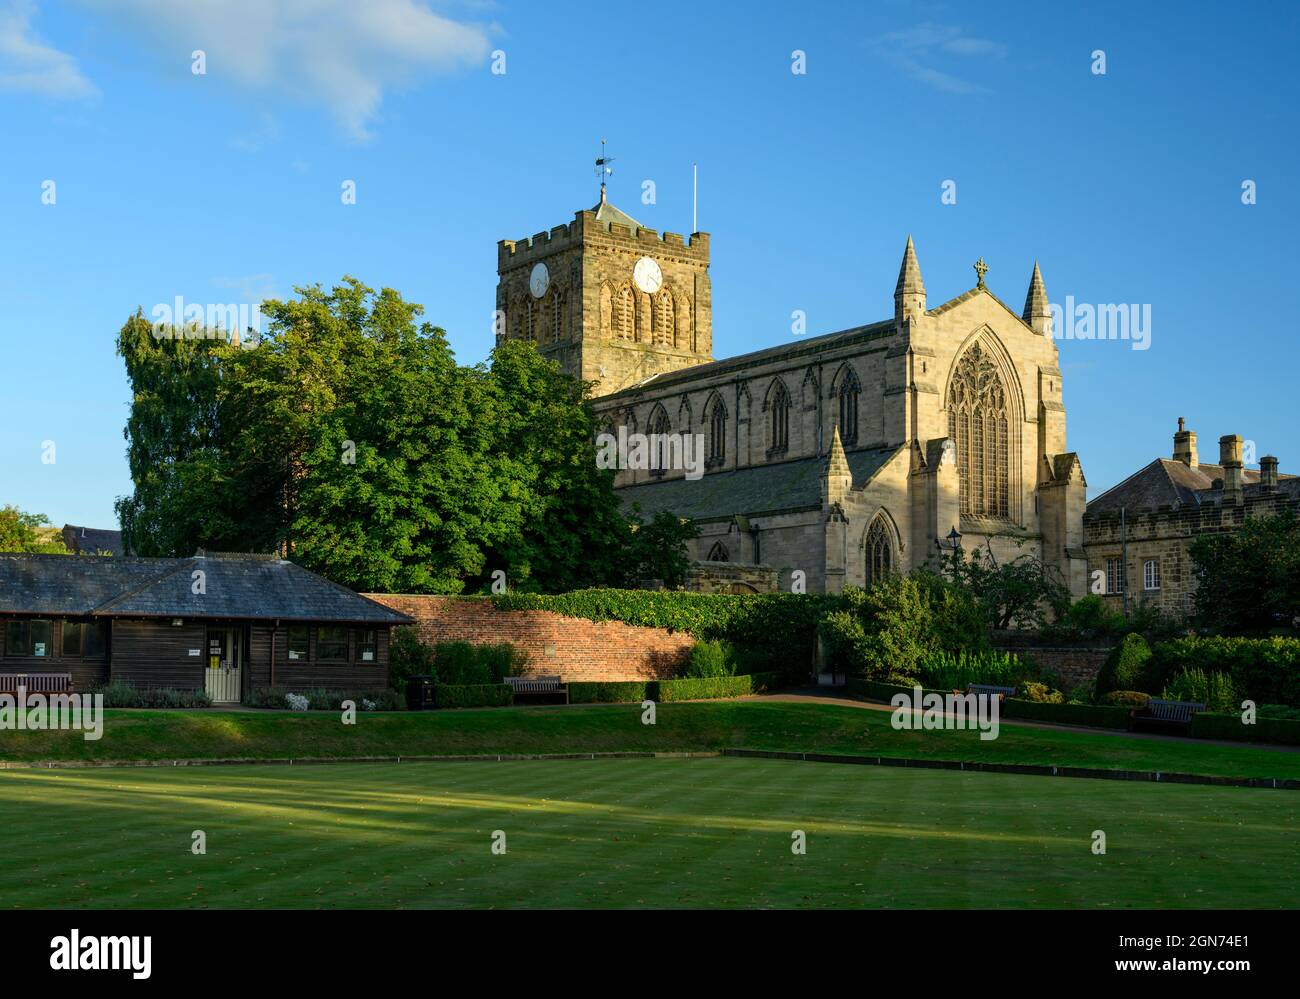 England, Northumberland, Hexham Abbey. Hexham Abbey in der Stadt Hexham, Northumberland, im Nordosten Englands. Stockfoto